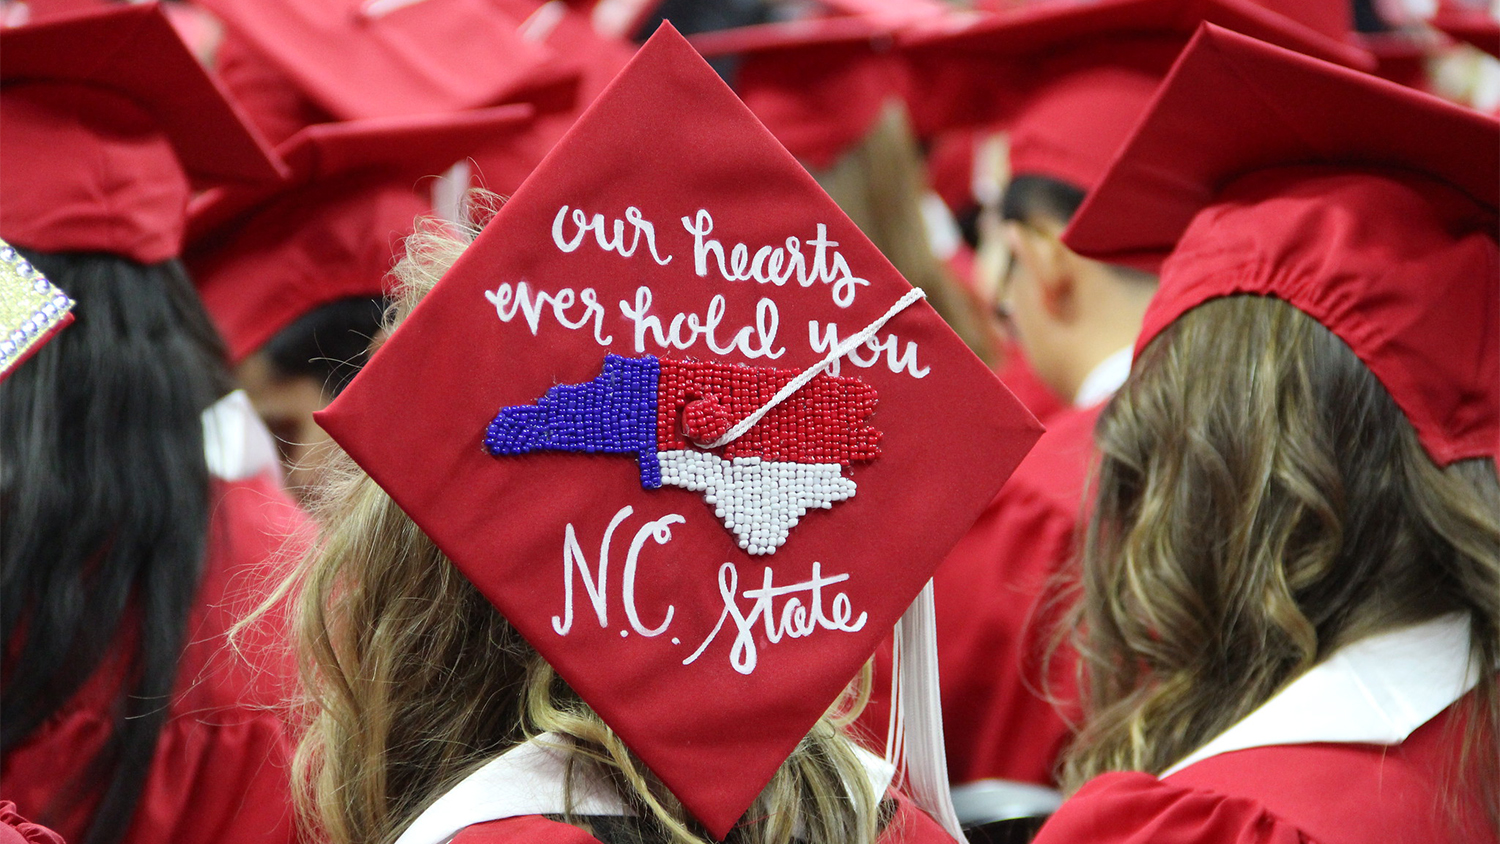 11 graduation cap designs from graduates of Kentucky colleges